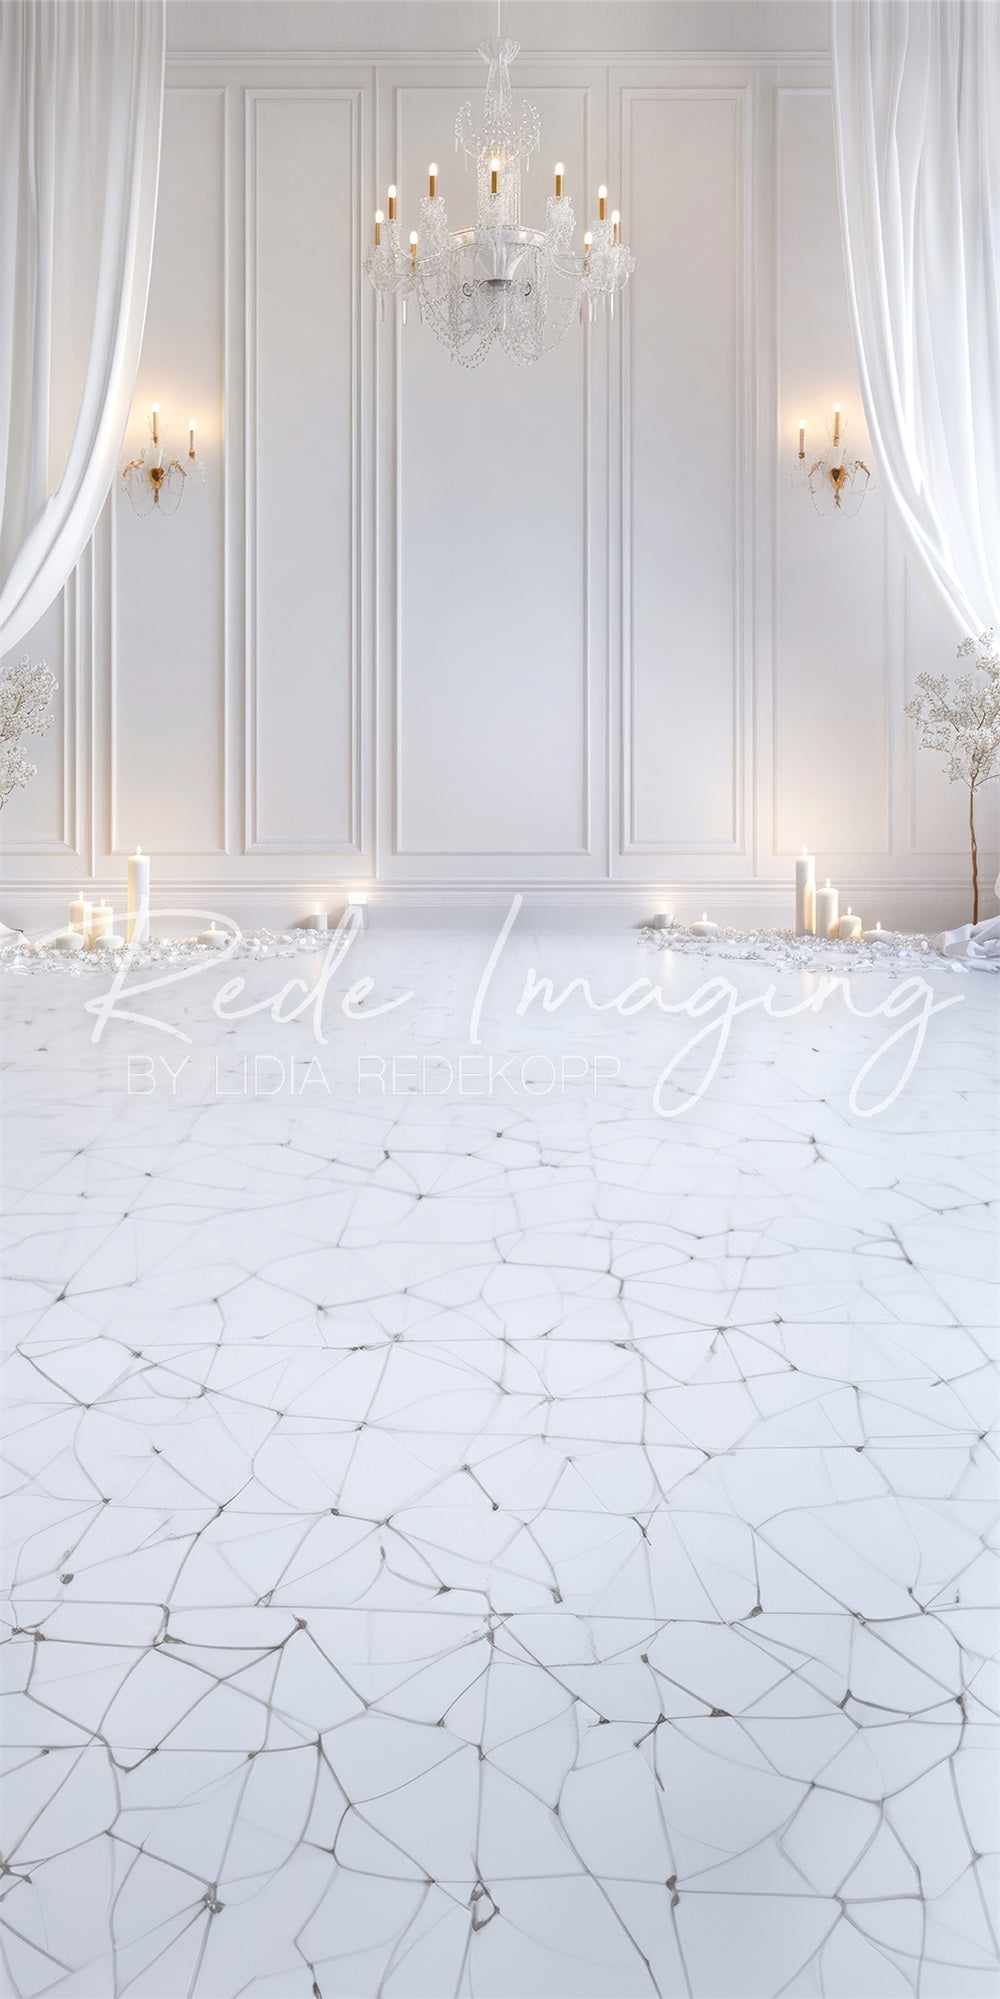 Sweep Retro Elegant White Curtain and Chandelier Backdrop Ontworpen door Lidia Redekopp